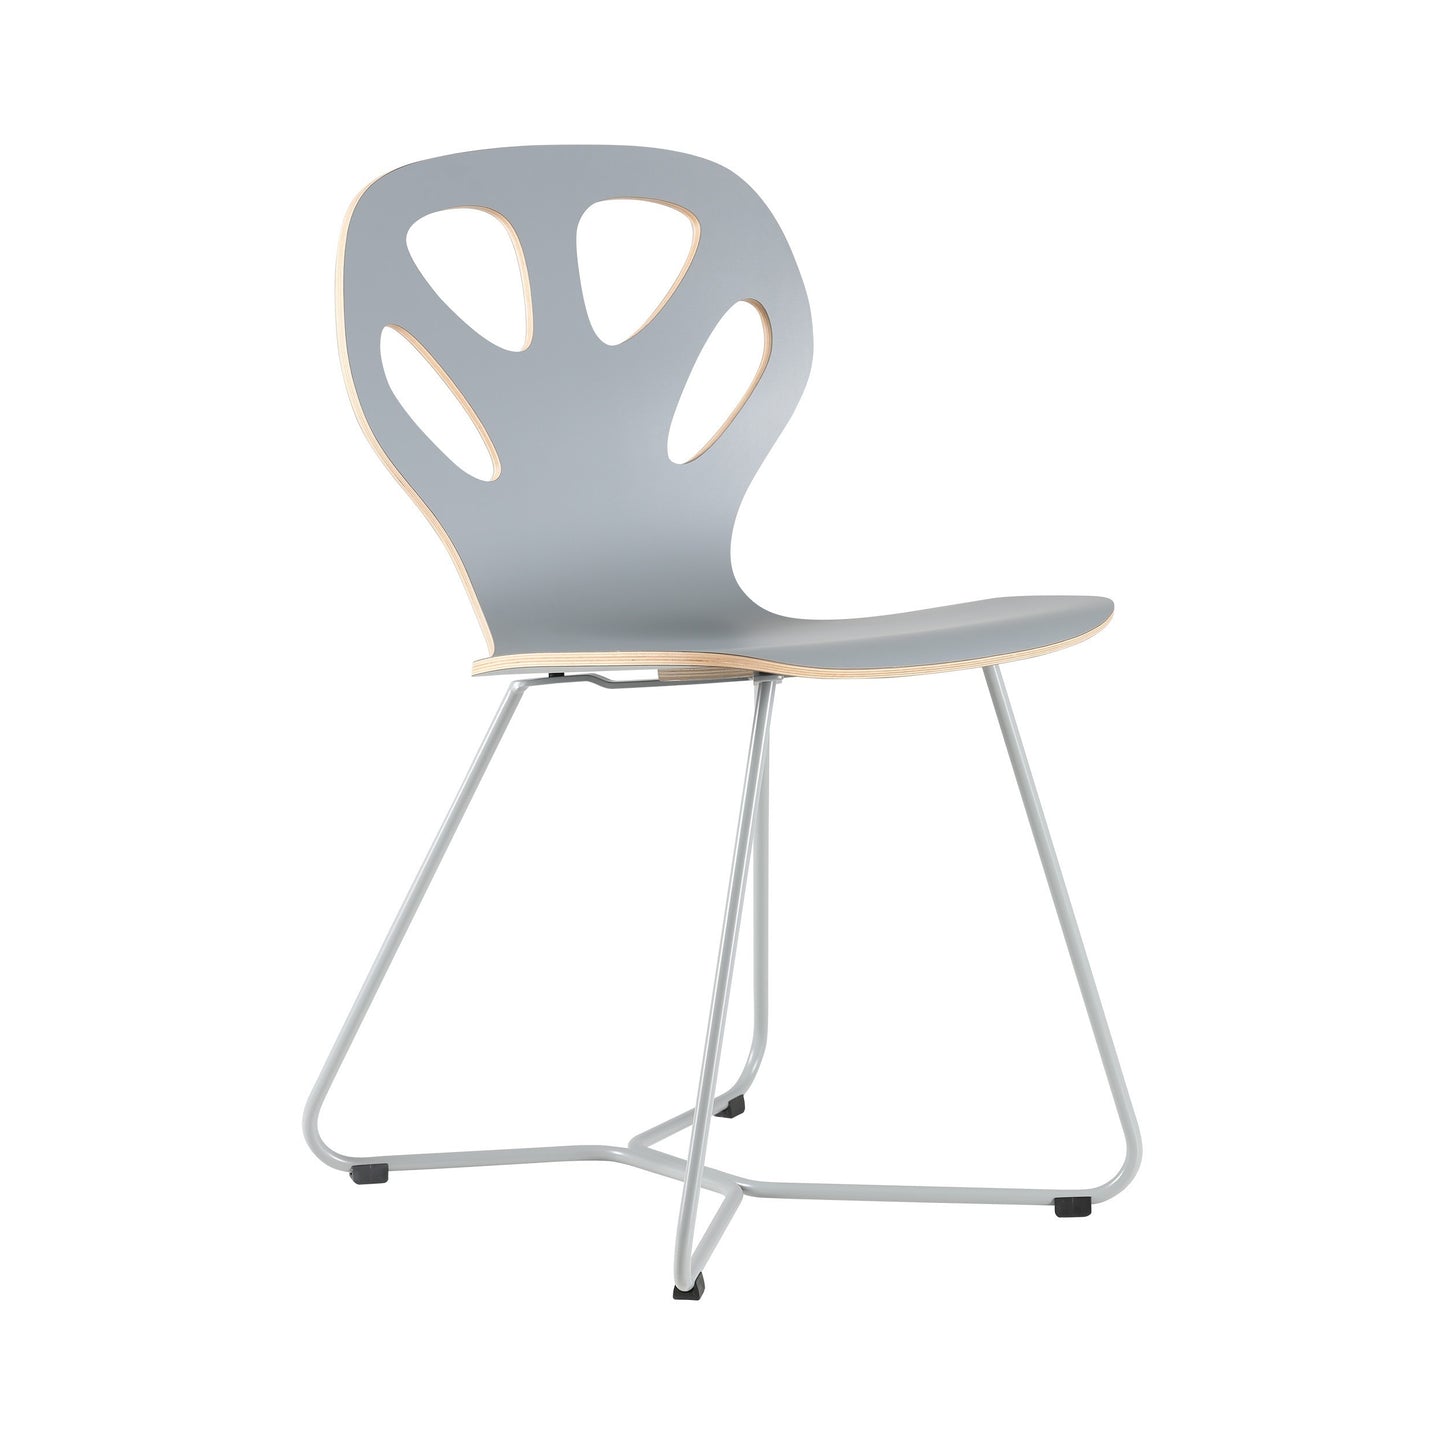 Chair Maple M02 - Grey